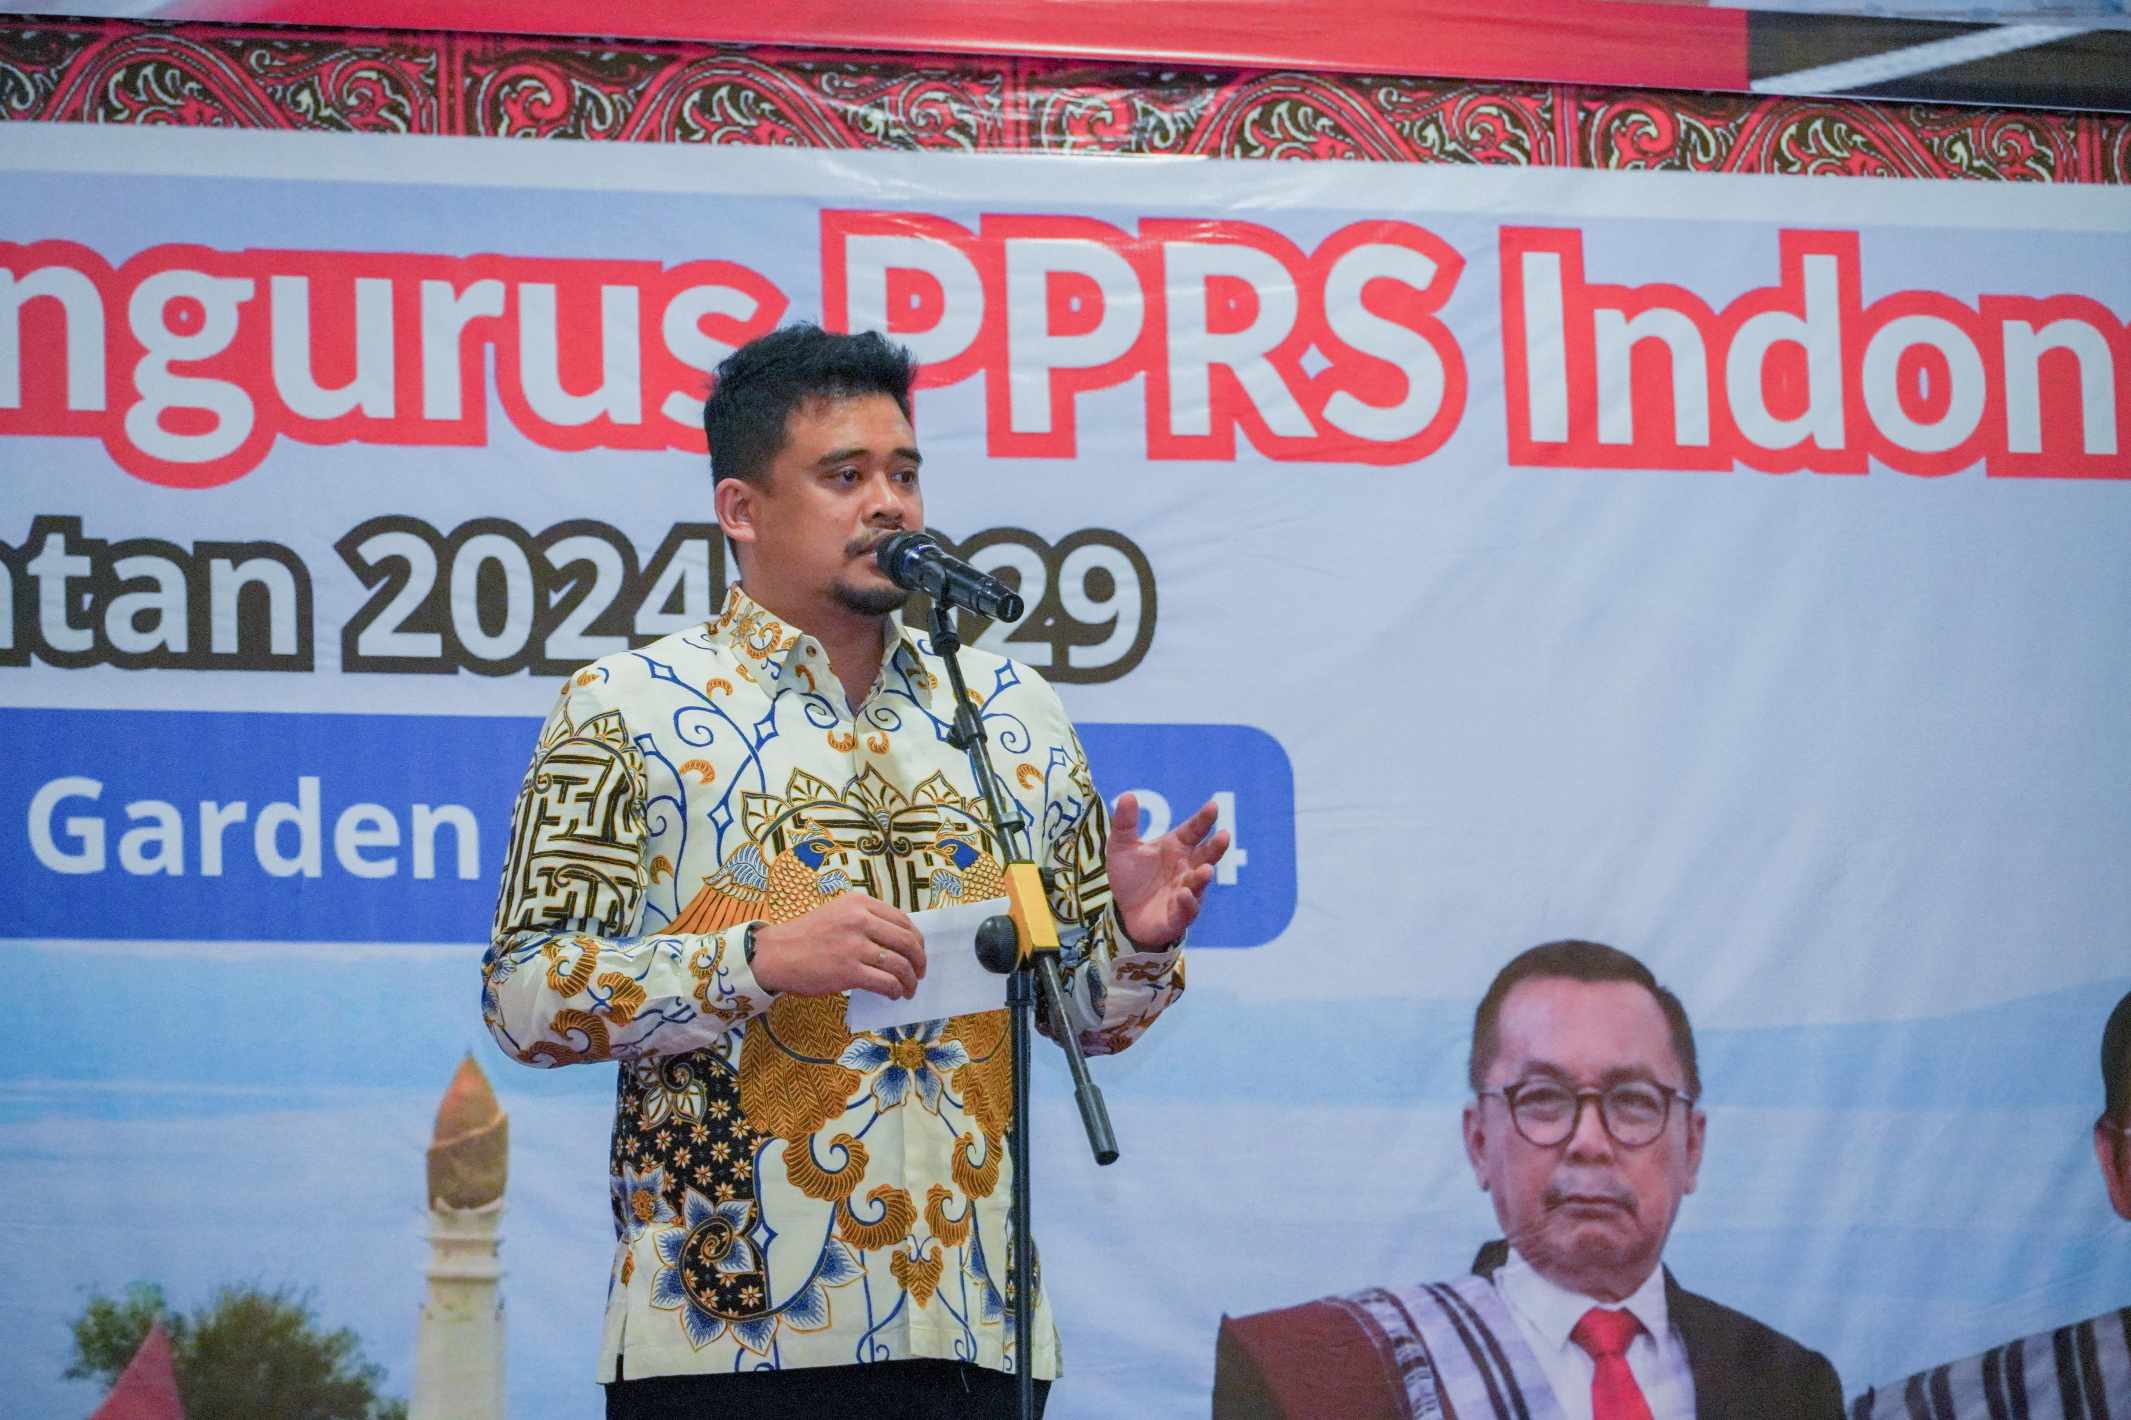 Wujudkan Indonesia Emas 2045, Bobby Nasution Ajak Keluarga Besar PPRS Perangi Narkoba